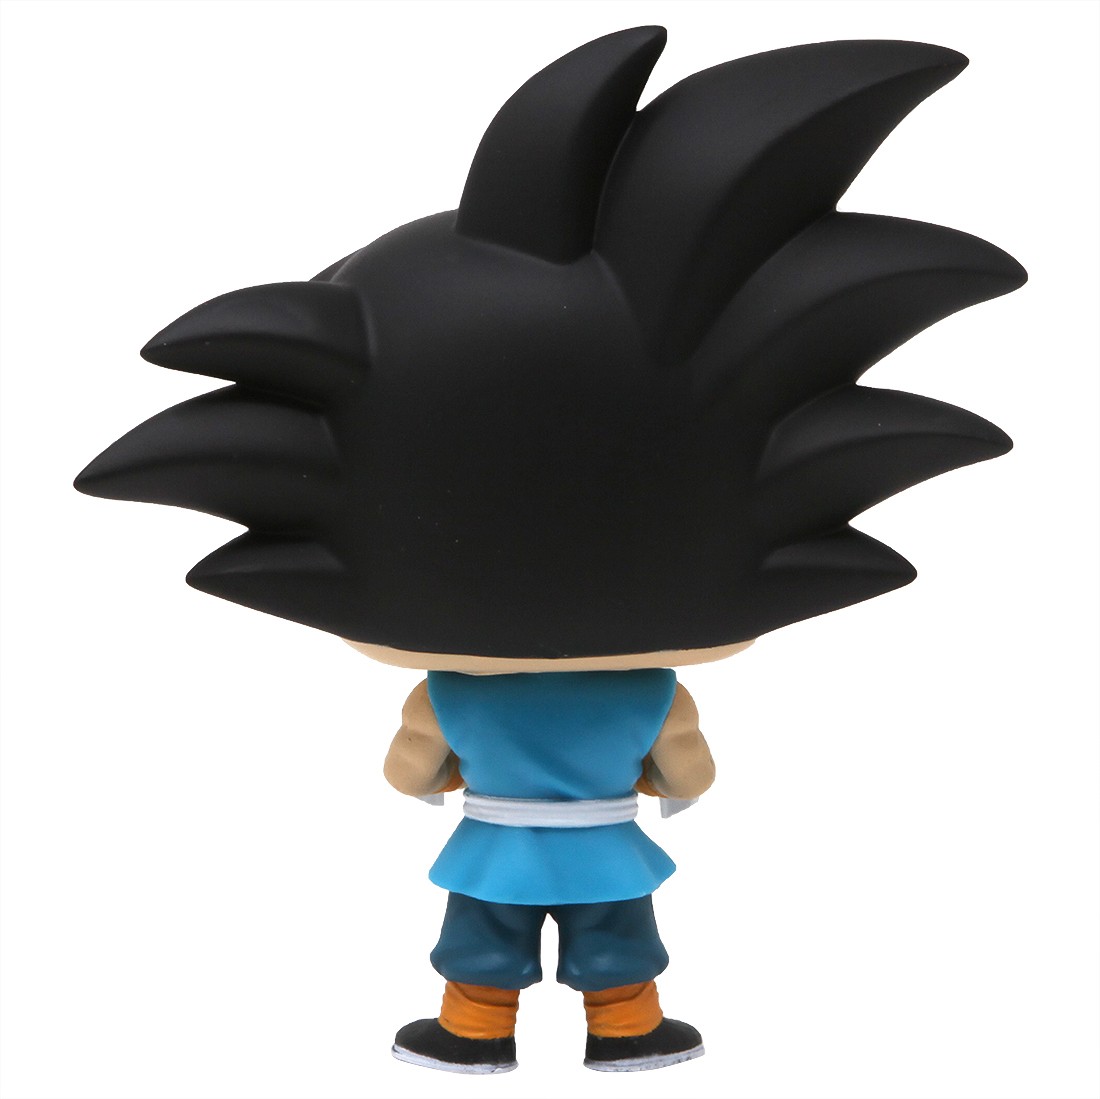 Funko Pop! Animation: DRAGON Ball Super - Goku Black Collectible Figure